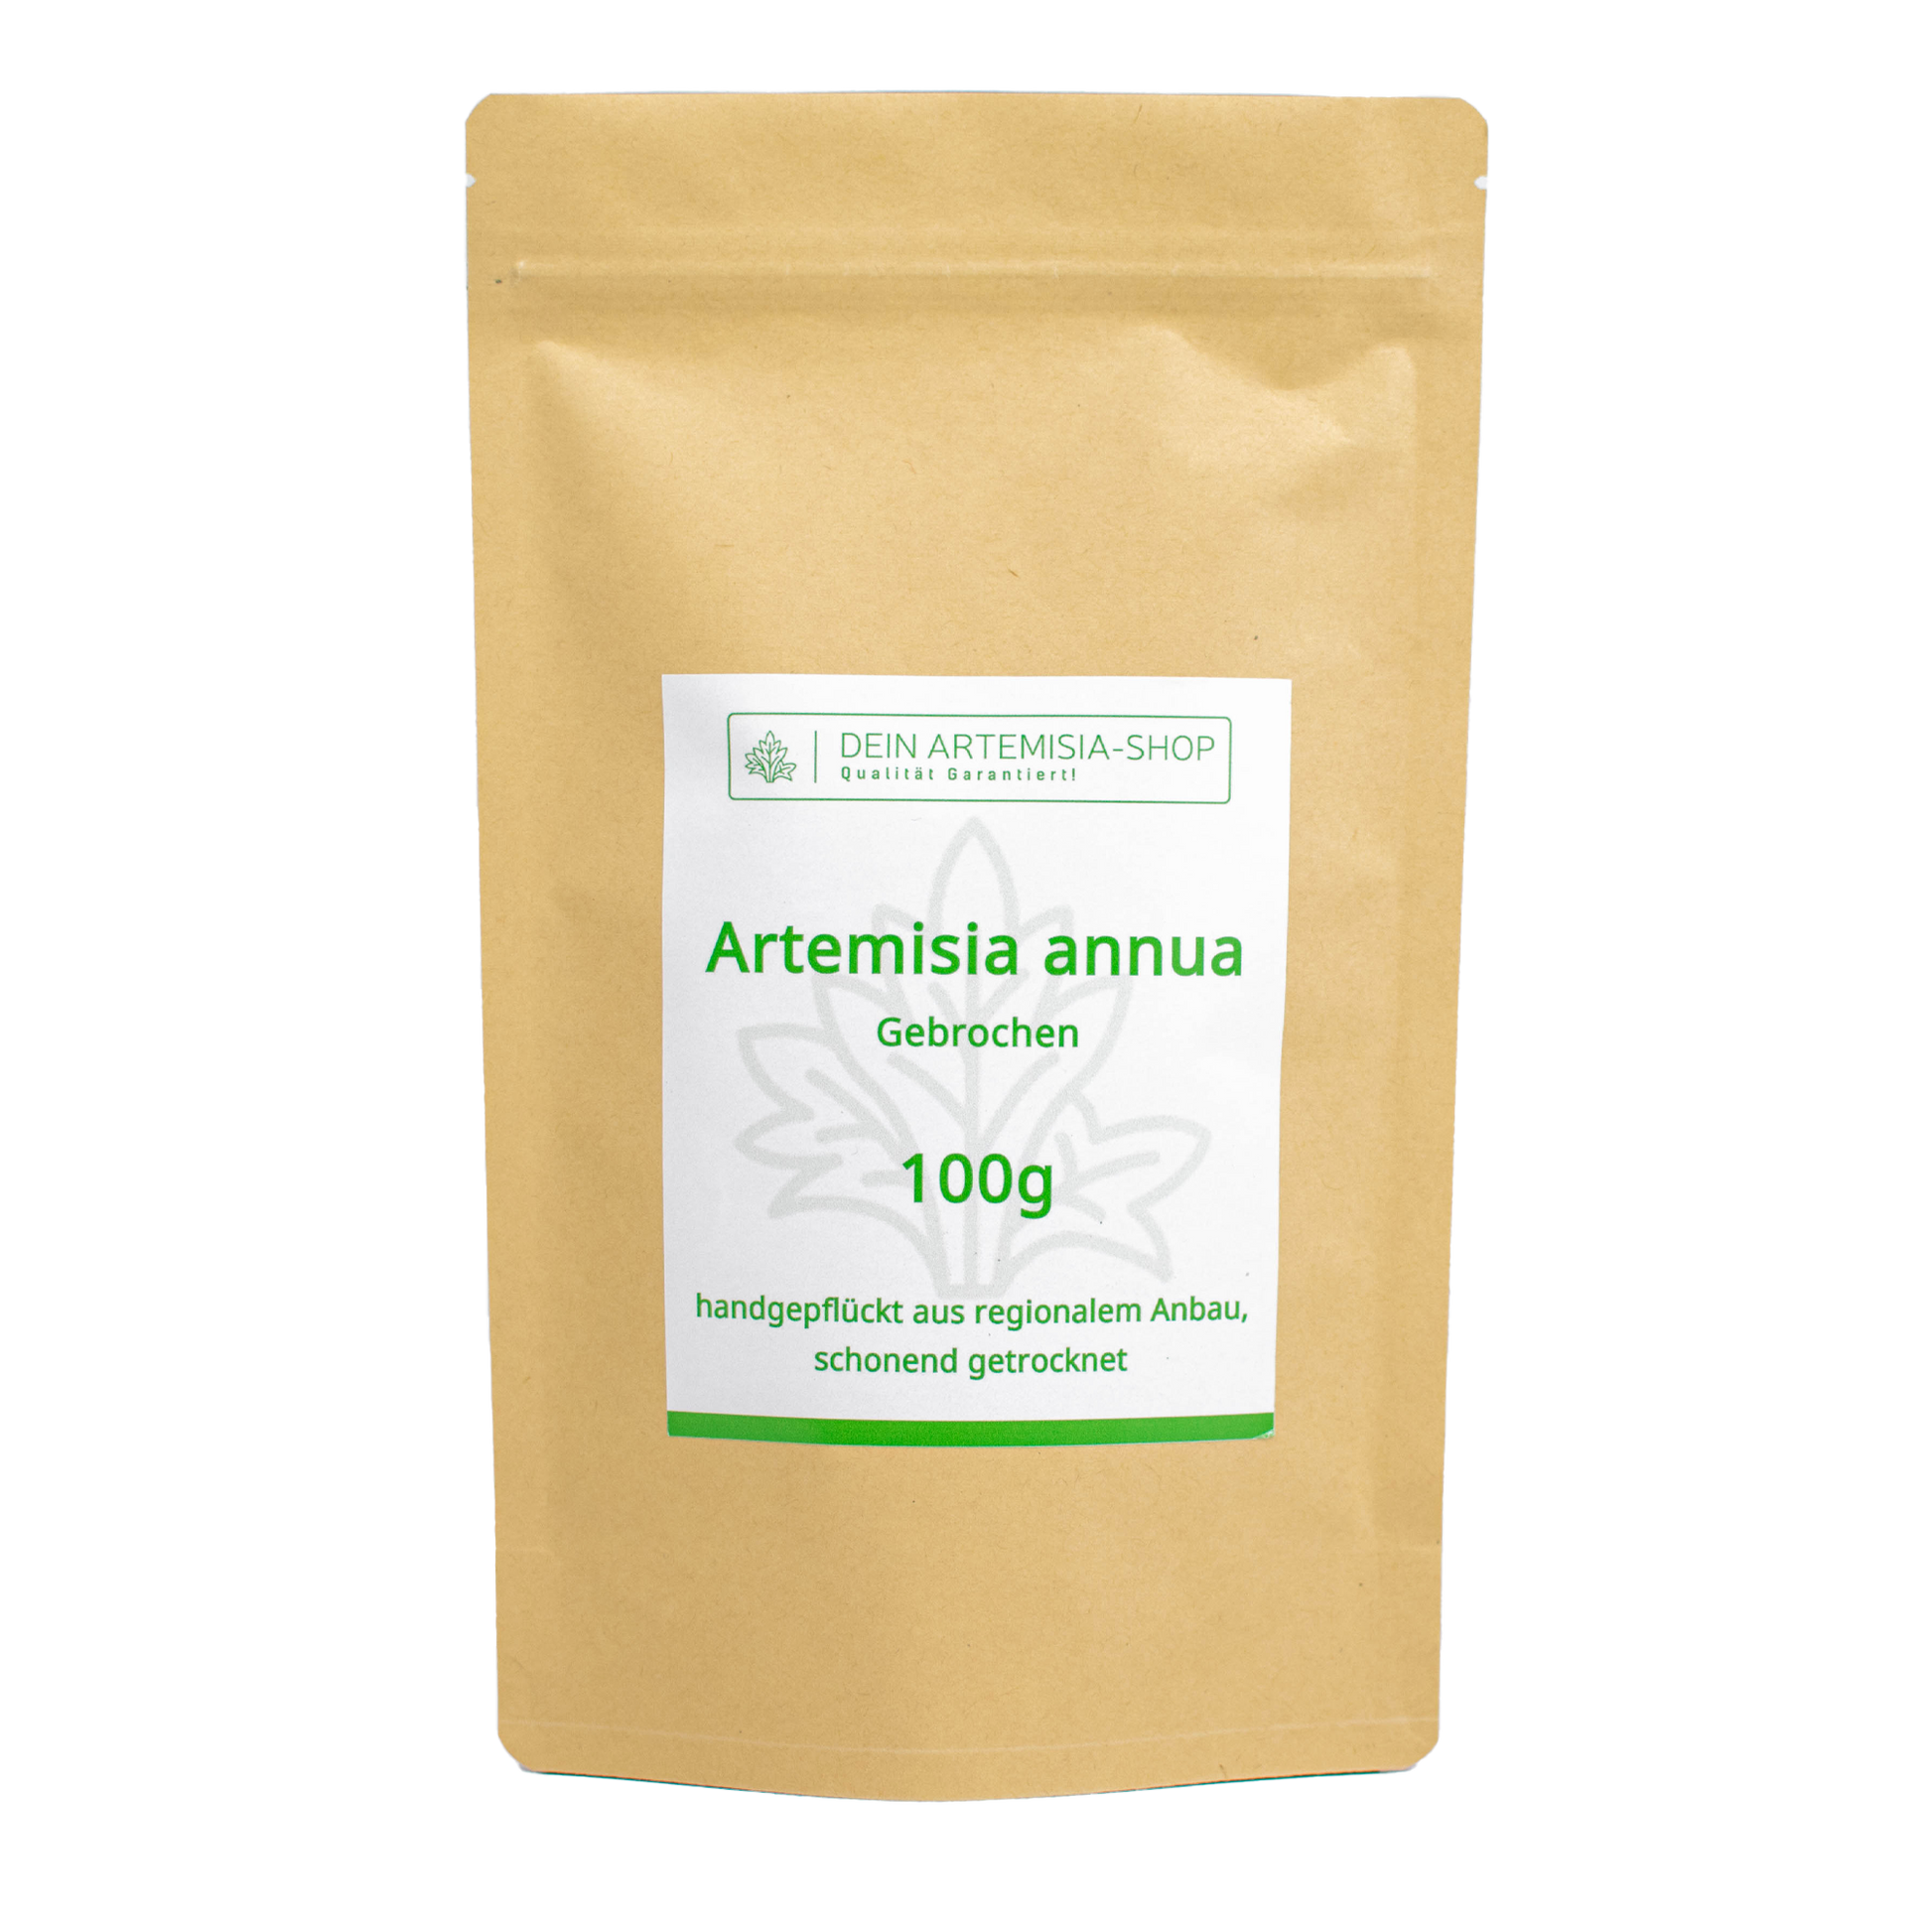 Artemisia annua Beifuß - gebrochen verpackt